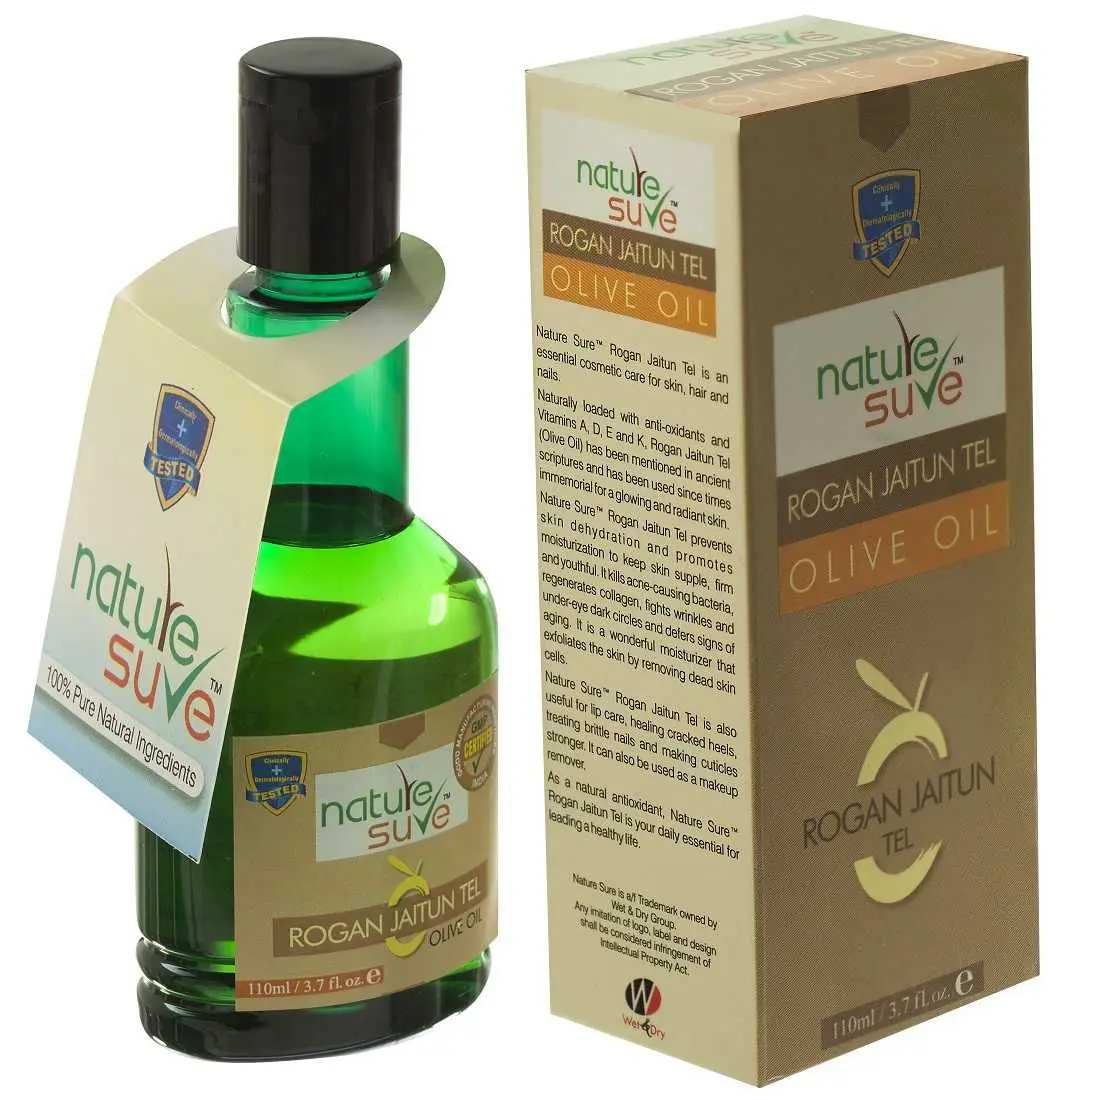 Nature Sure Rogan Jaitun Oil - Pure Oilve Oil